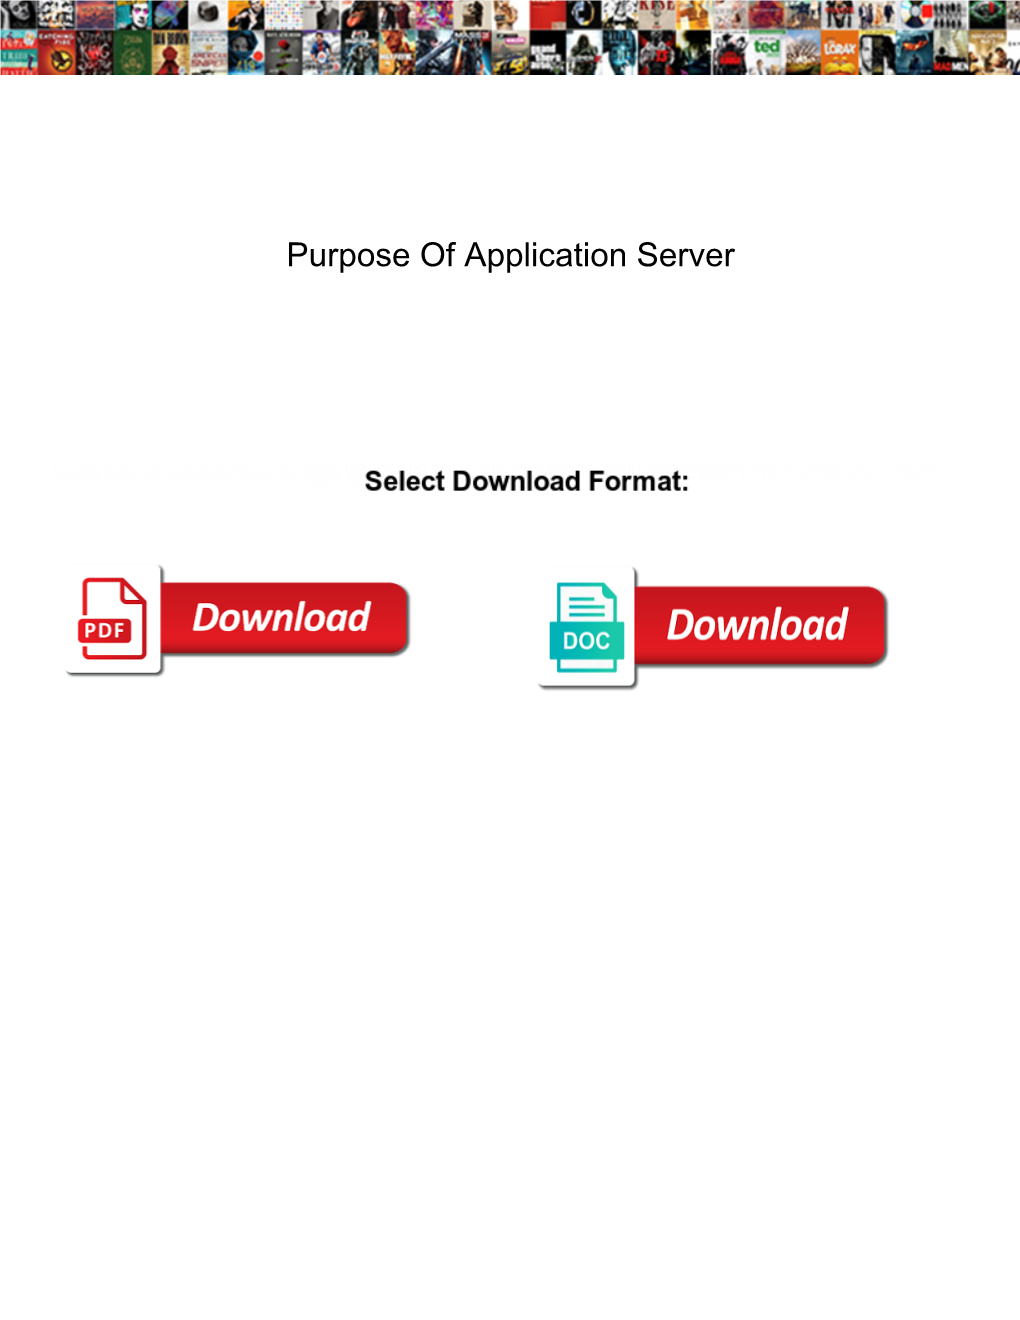 Purpose of Application Server